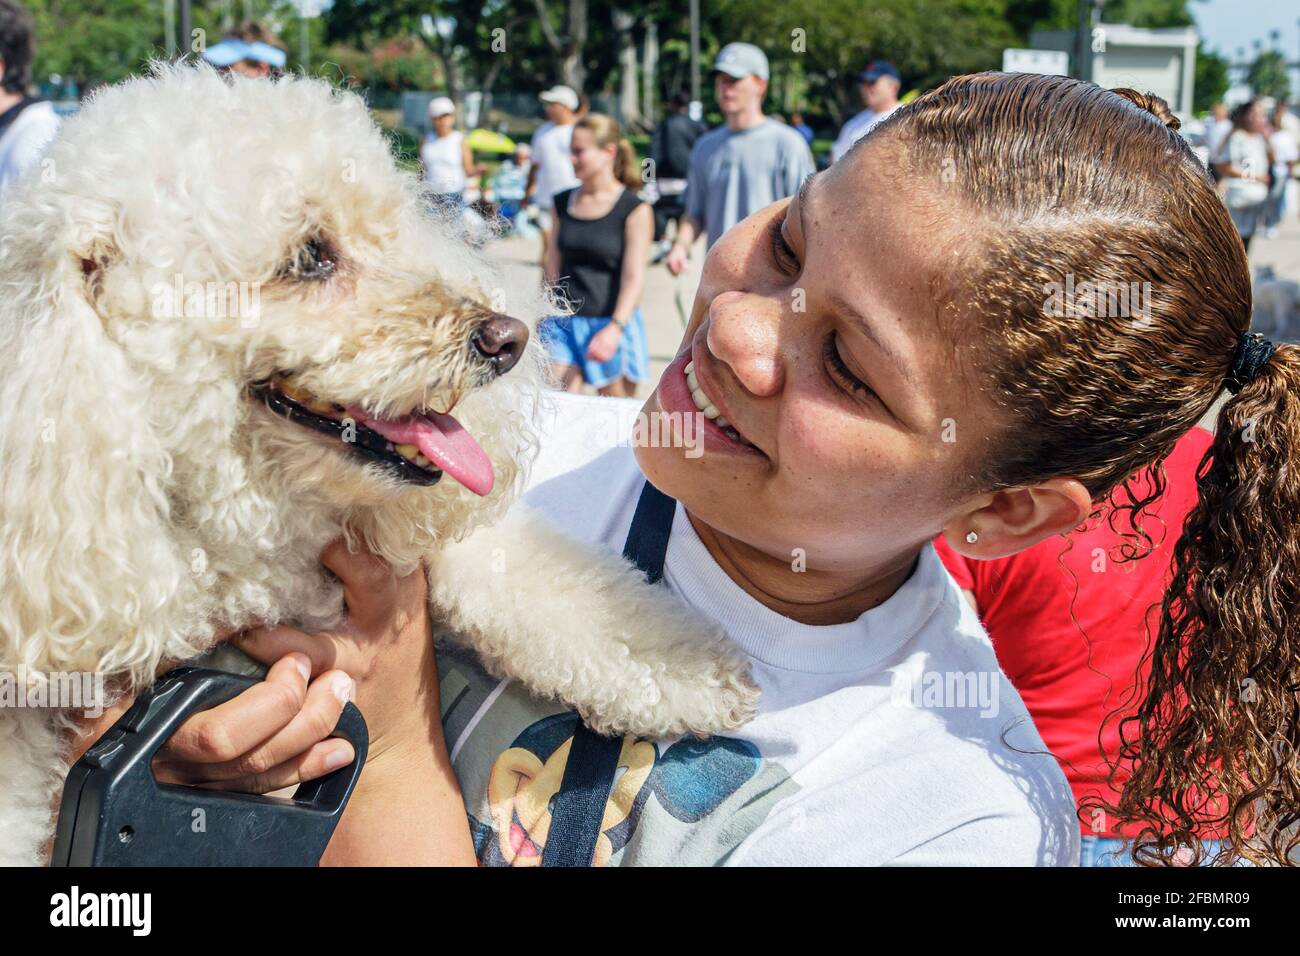 Miami Florida,Bayfront Park Walk for the Animals,Humane Society fundraising event dogs,Black girl female kid student volunteer hugging holding dog, Stock Photo